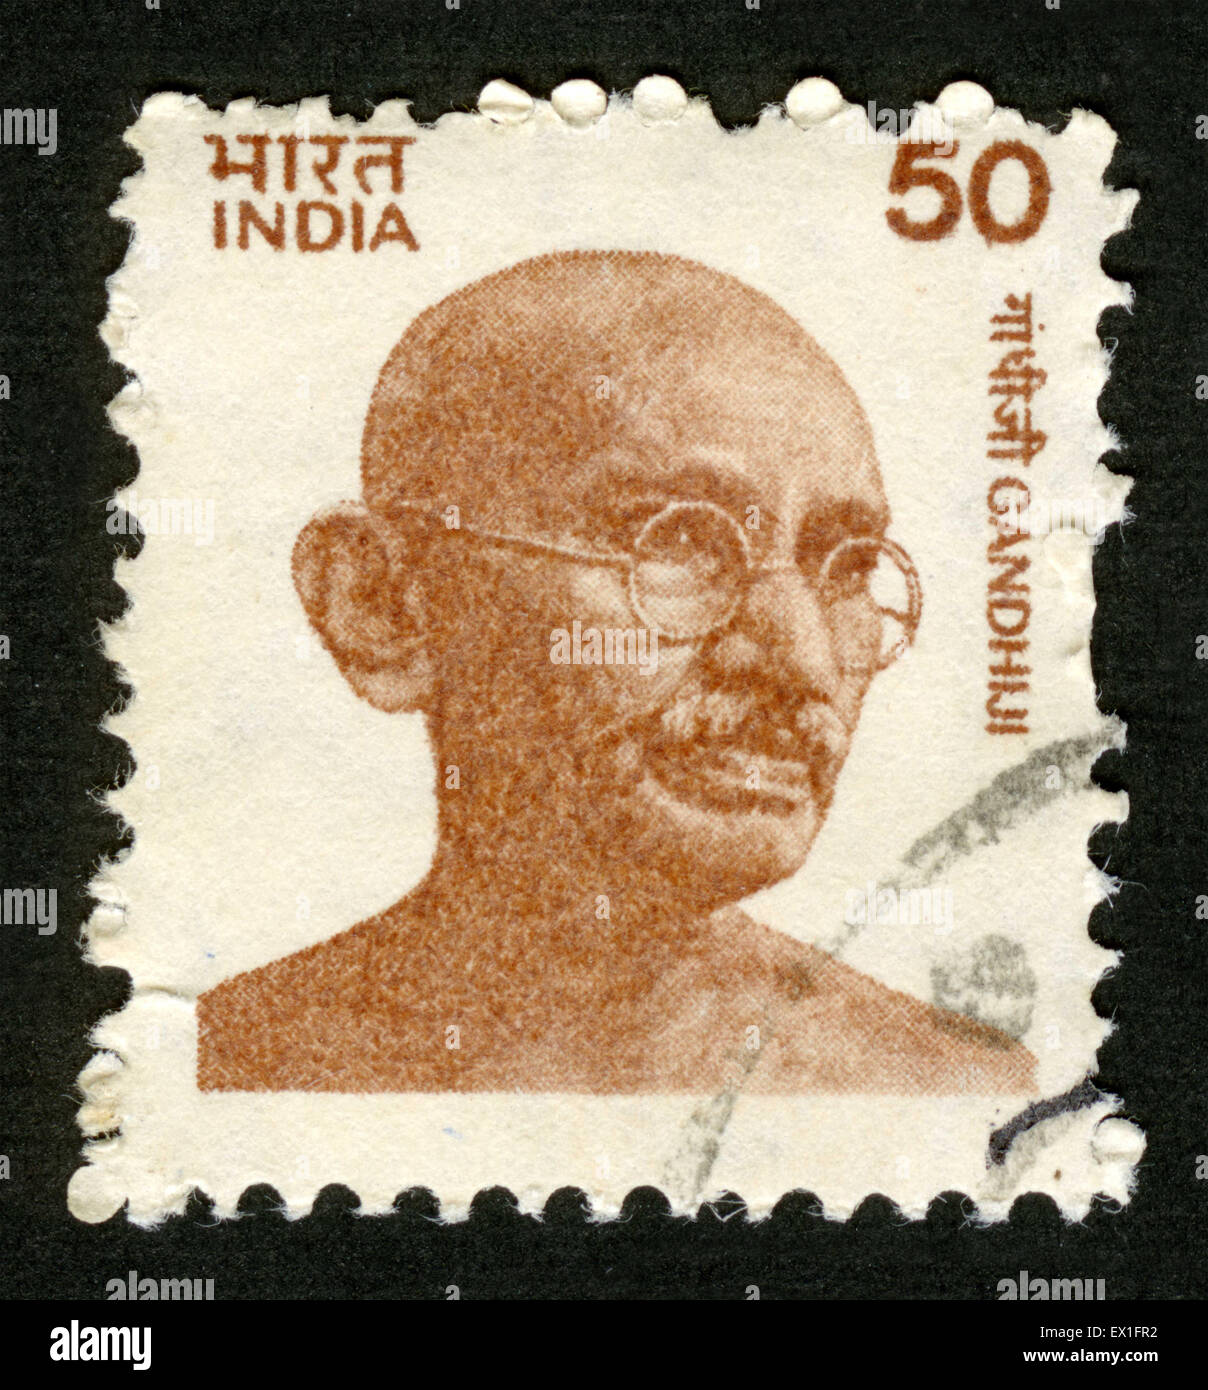 INDIA - CIRCA 1976: A stamp printed in India, shows  Mohandas Karamchand Gandhi, postage stamp, India, 1976 Stock Photo